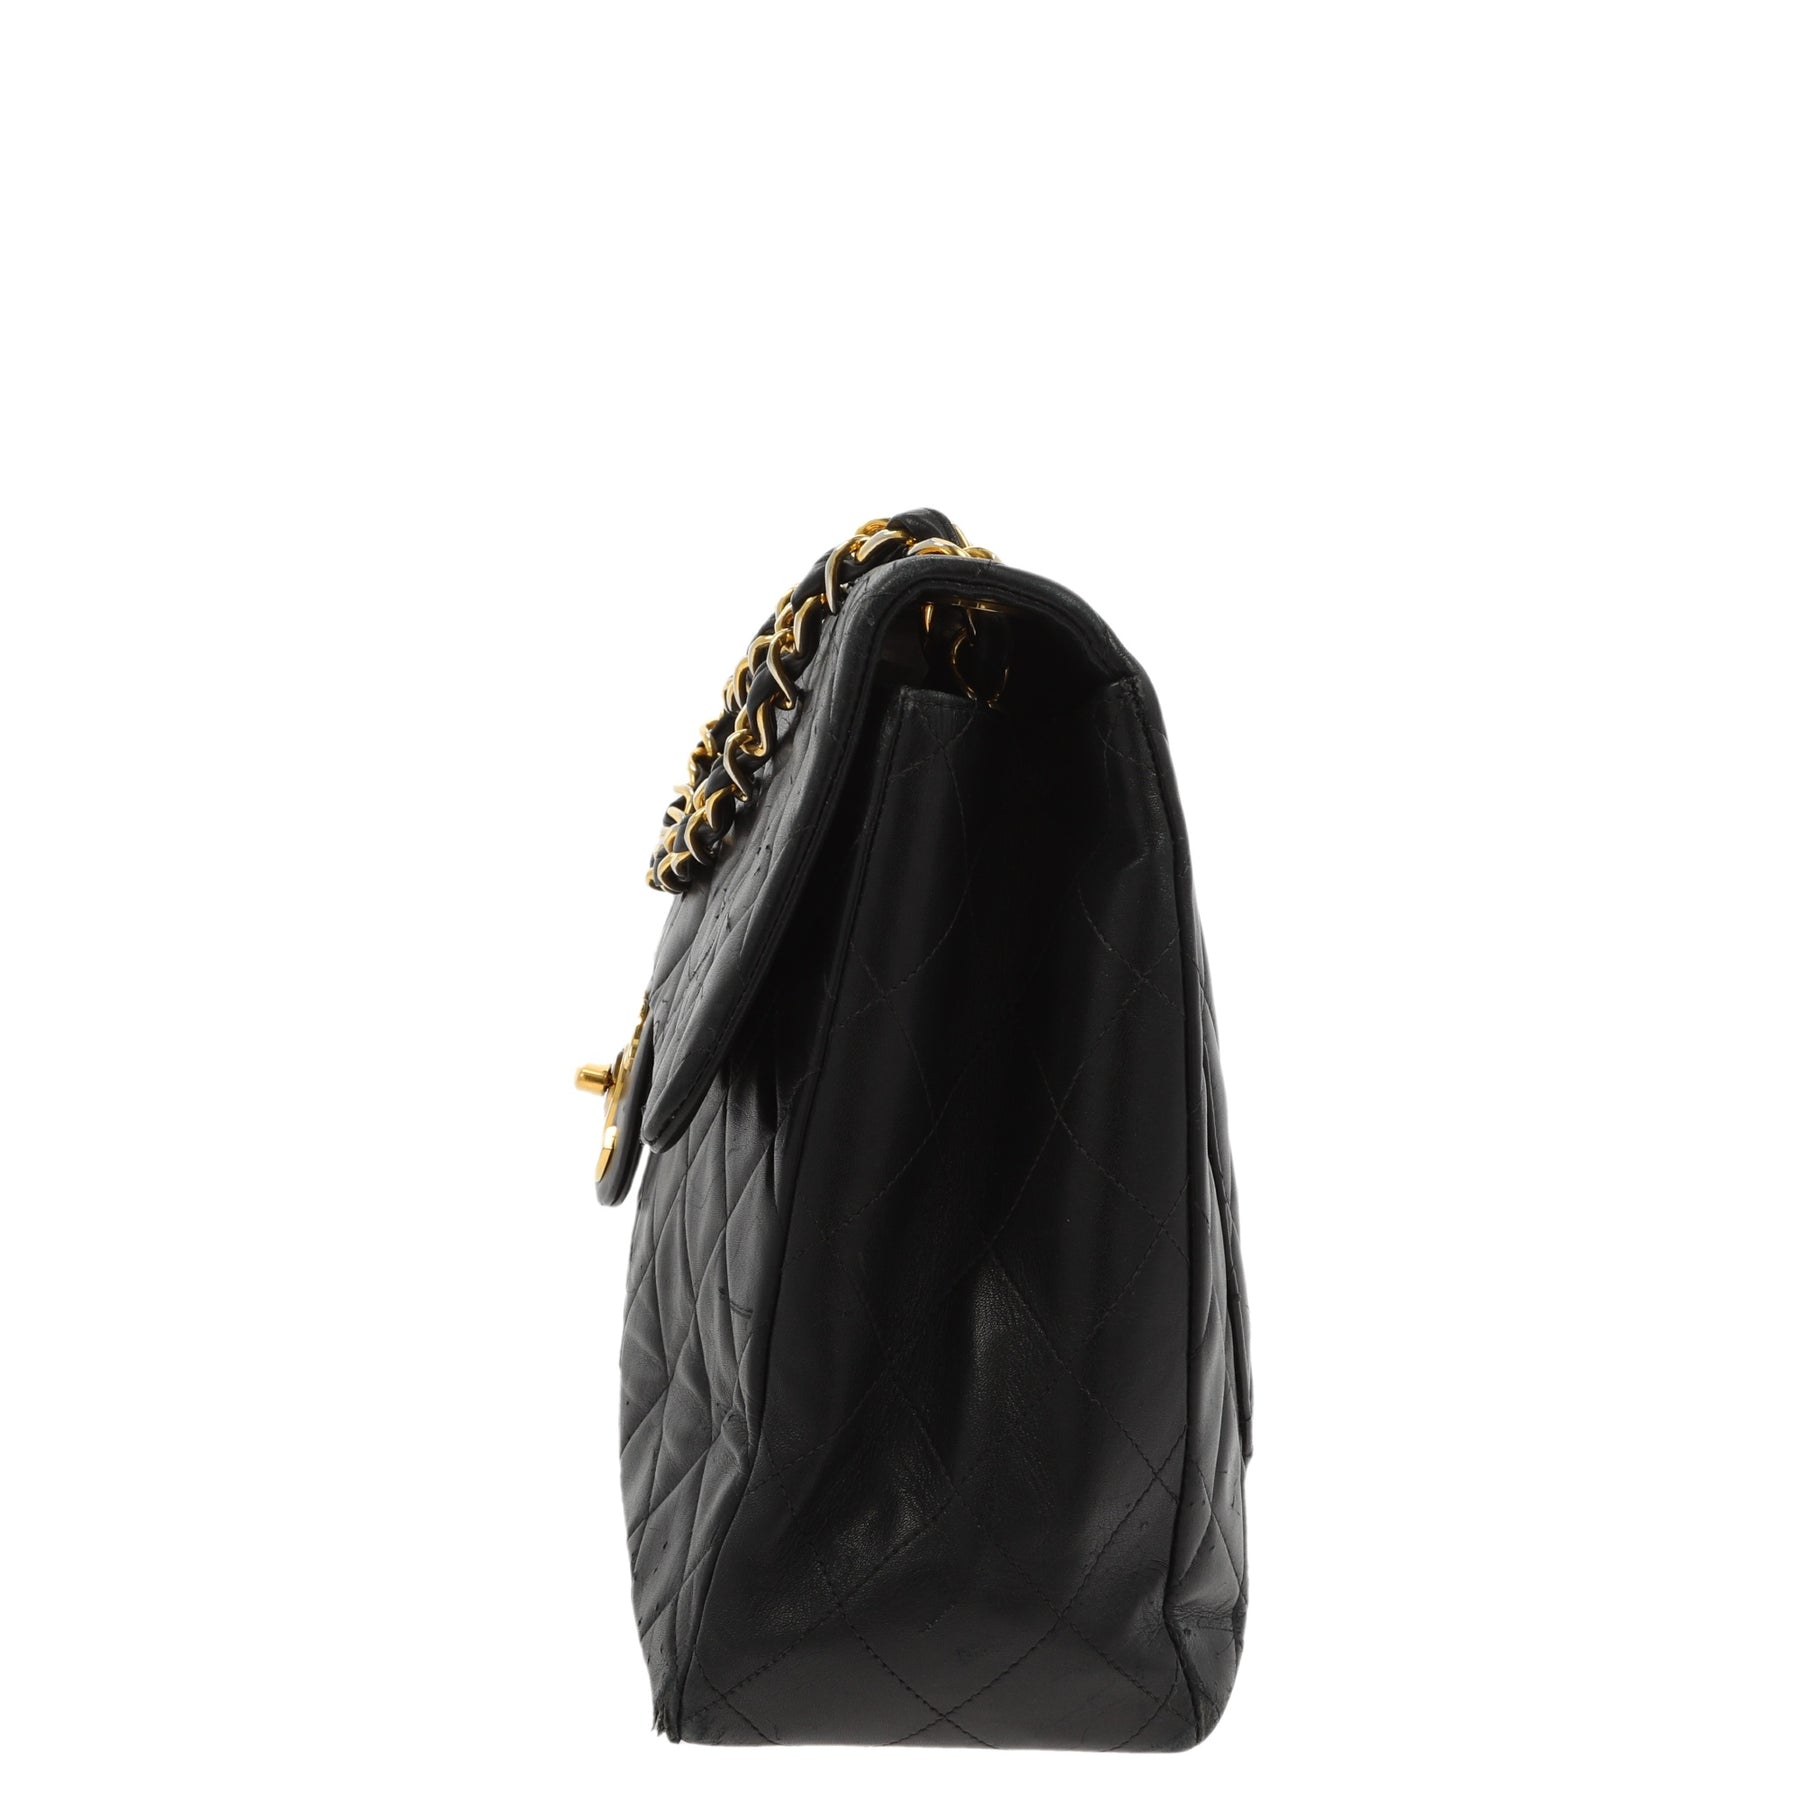 Chanel Timeless/Classique Maxi Shoulder Bag in Black Leather – Fancy Lux